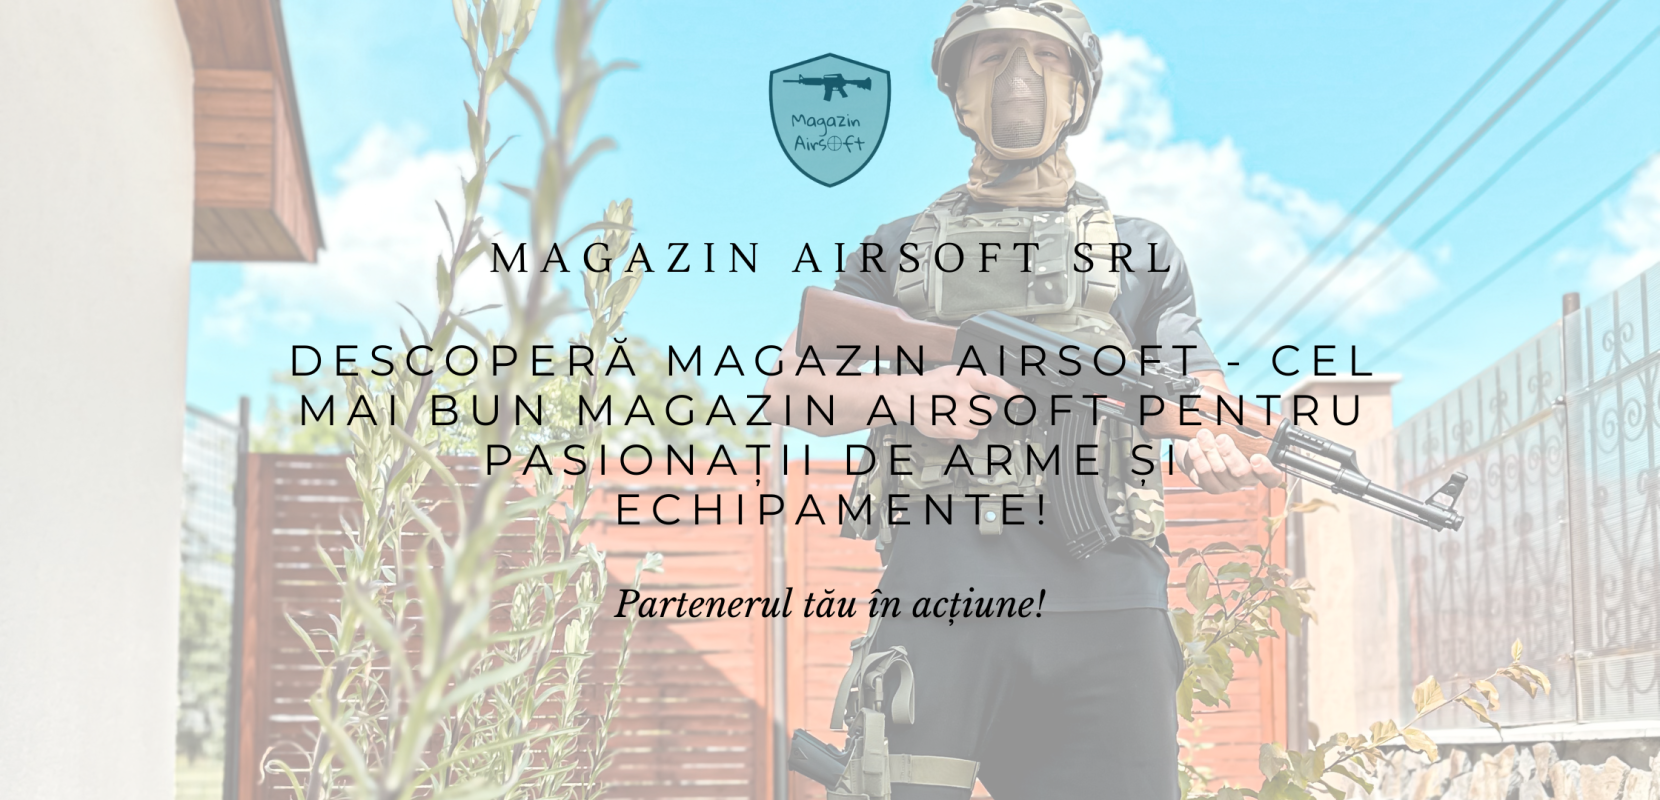 Descopera Magazin Airsoft - Cel mai bun magazin Airsoft pentru pasionatii de arme si echipamente!